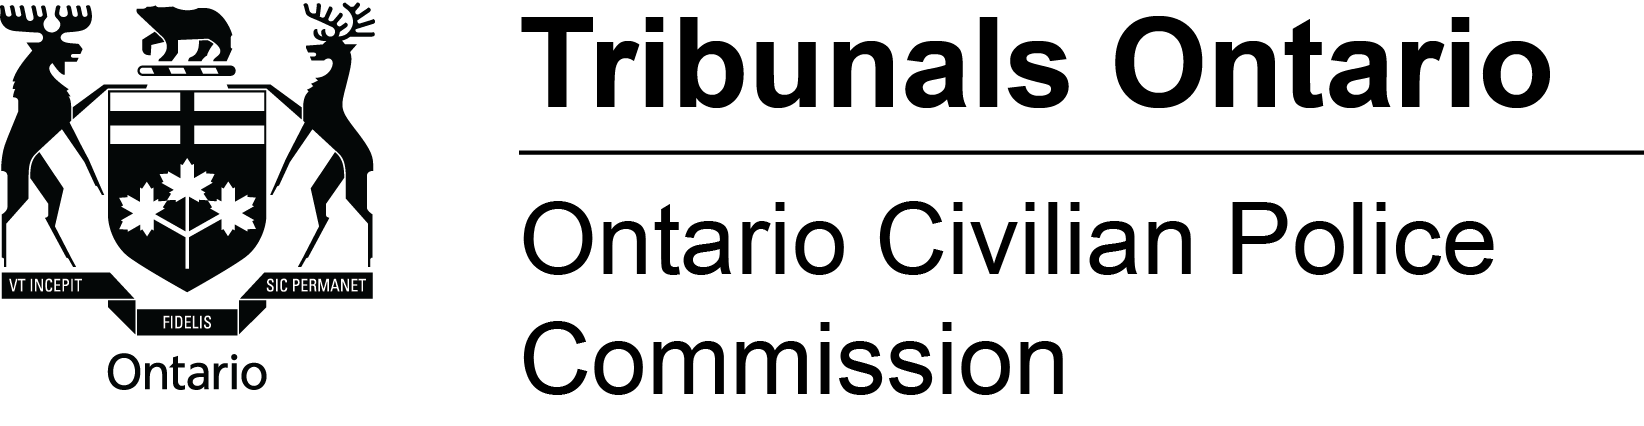 Ontario Civilian Police Commission logo